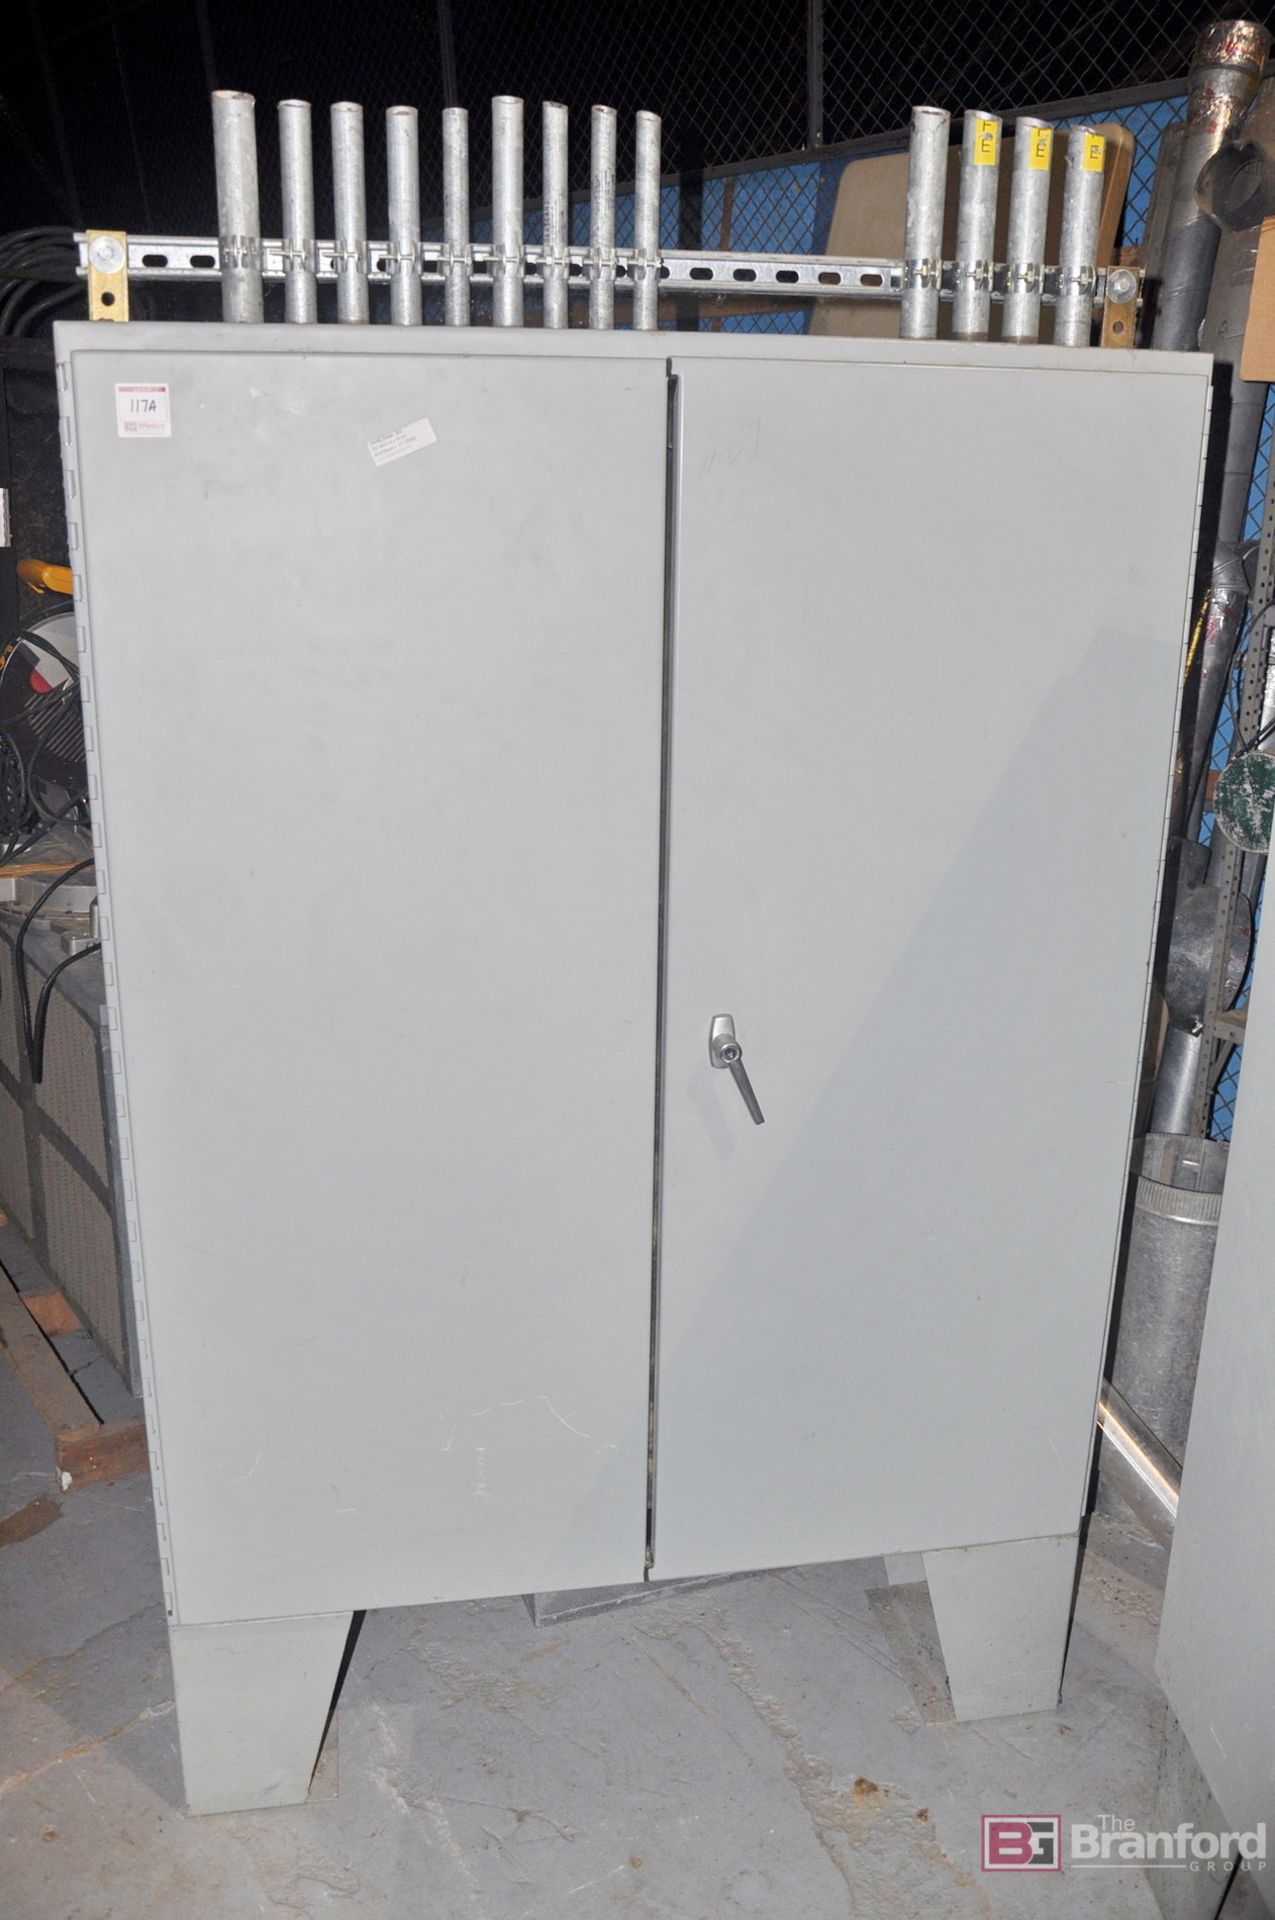 Electronics cabinet w/ Allen Bradley controls